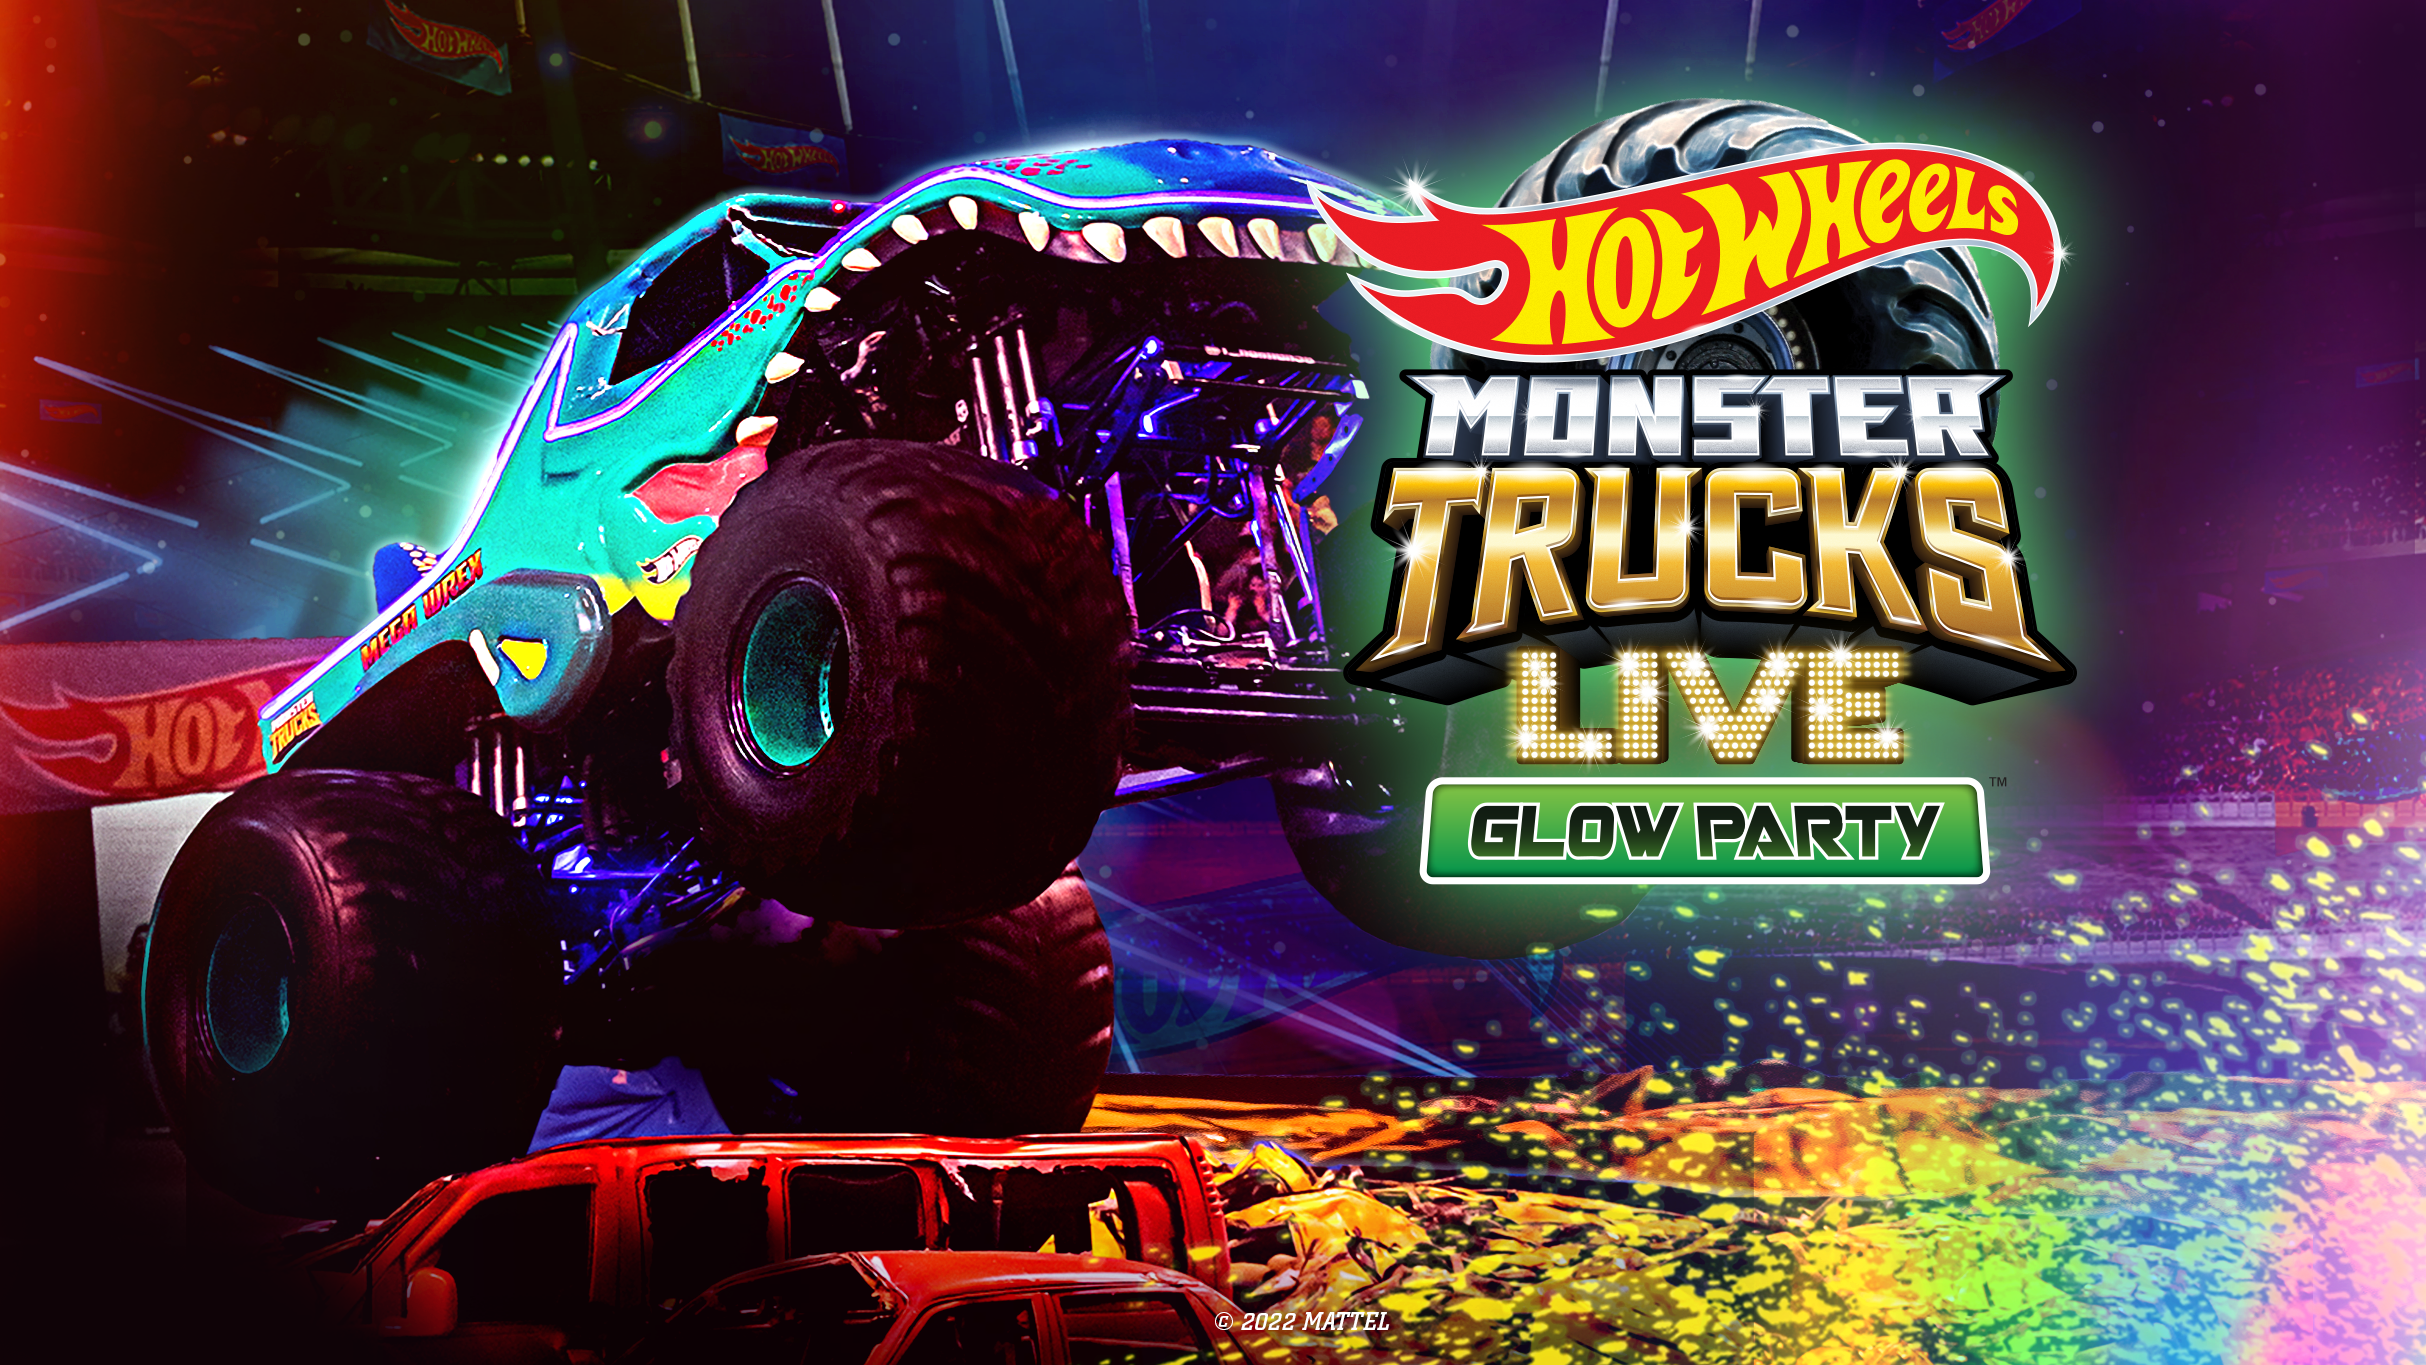 Hot Wheels Monster Trucks Live Glow Party free presale pasword